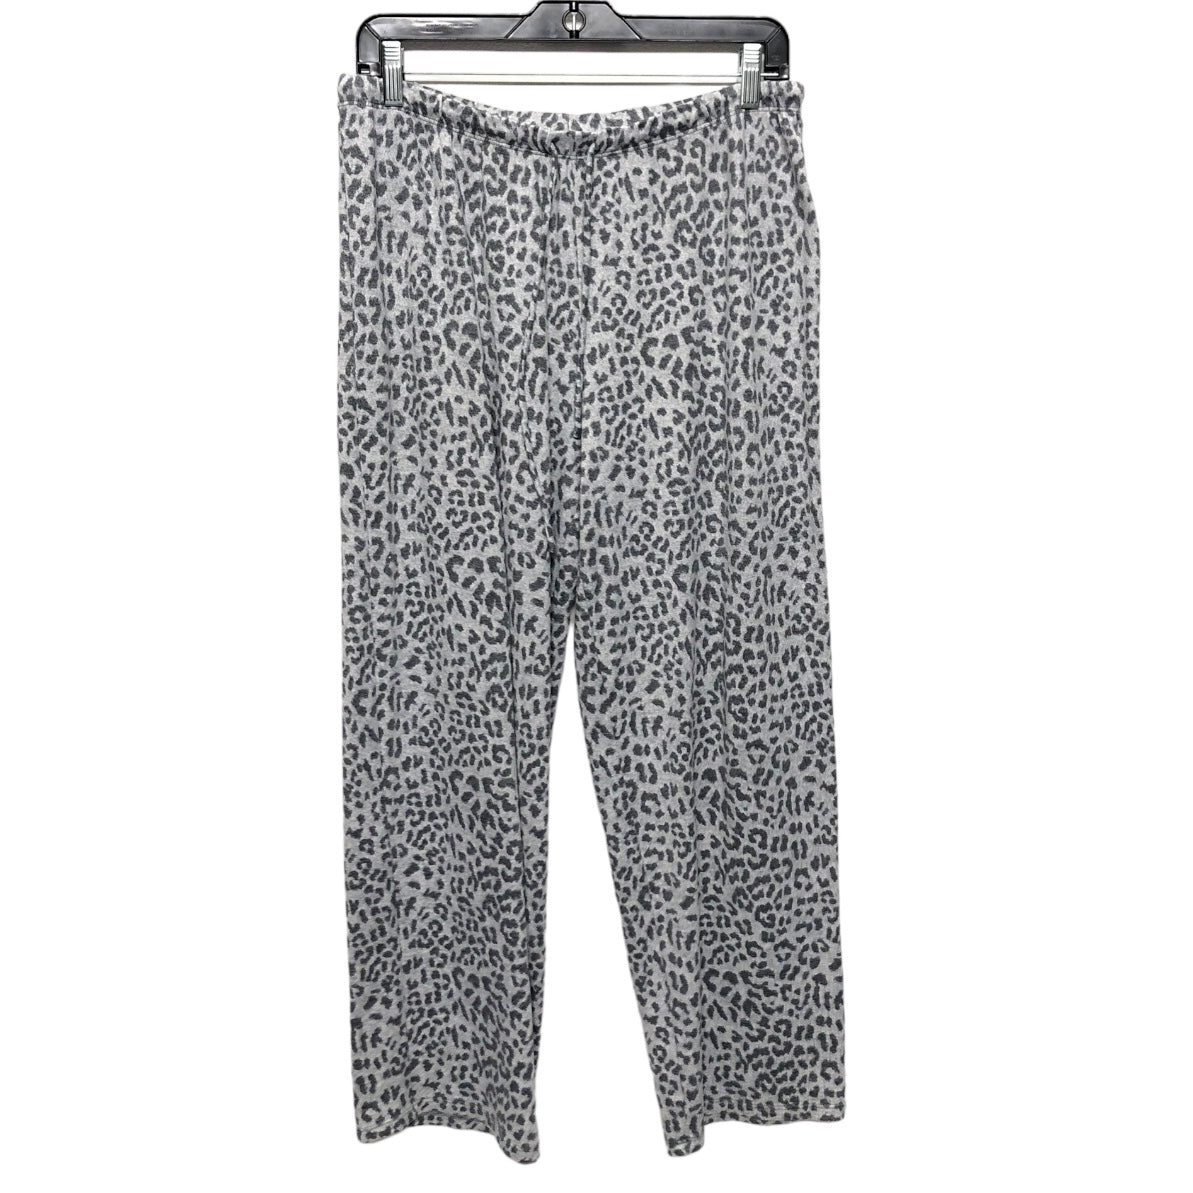 Pajamas 2pc By Ellen Tracy  Size: M